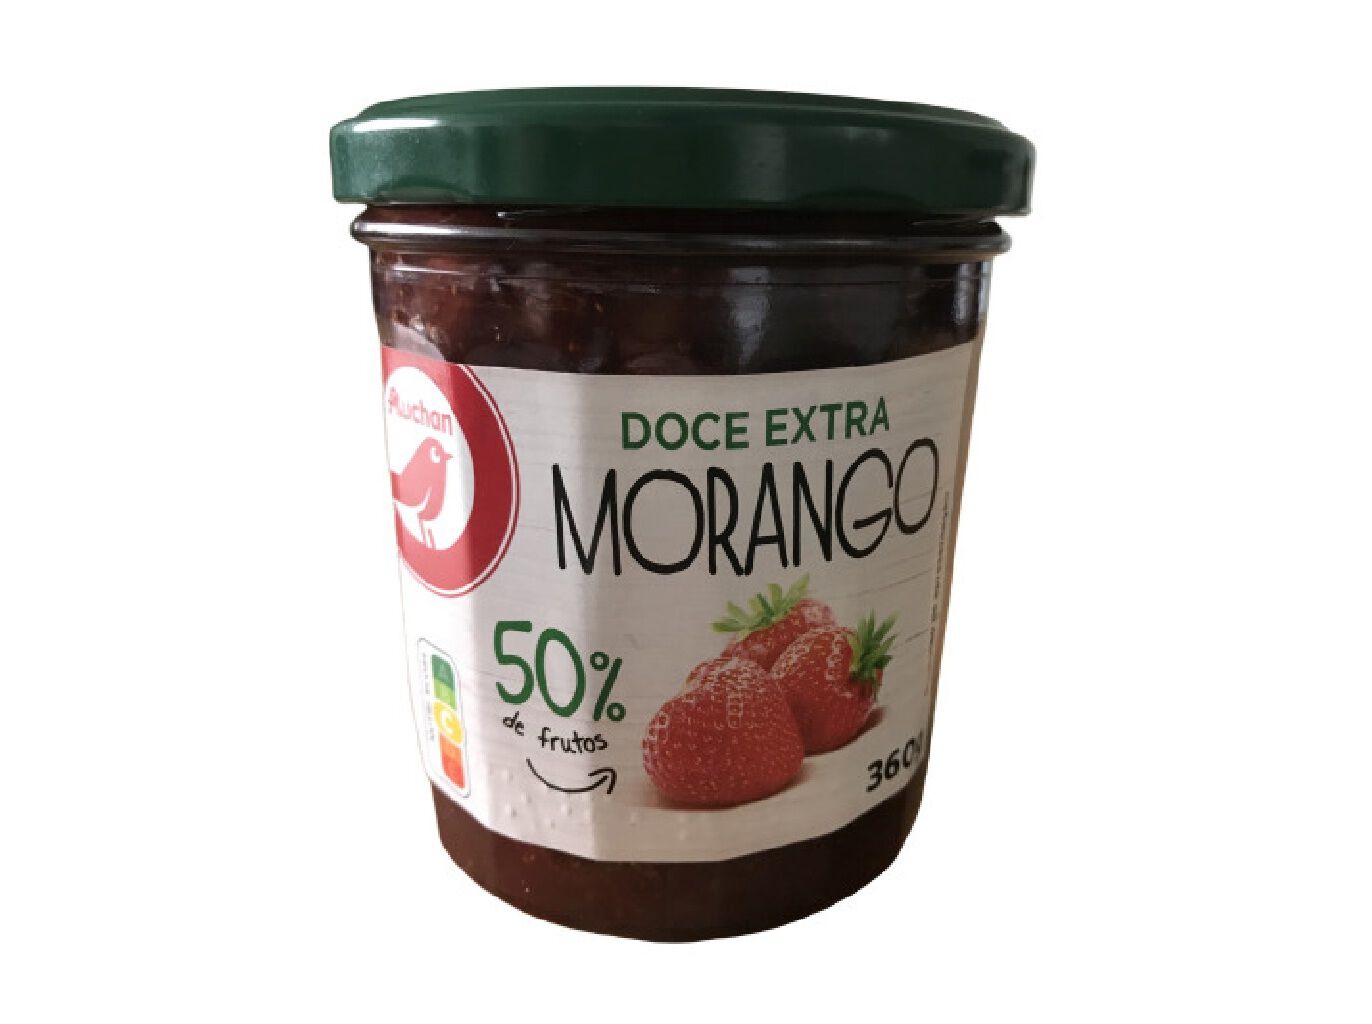 Doce de morango  Food From Portugal